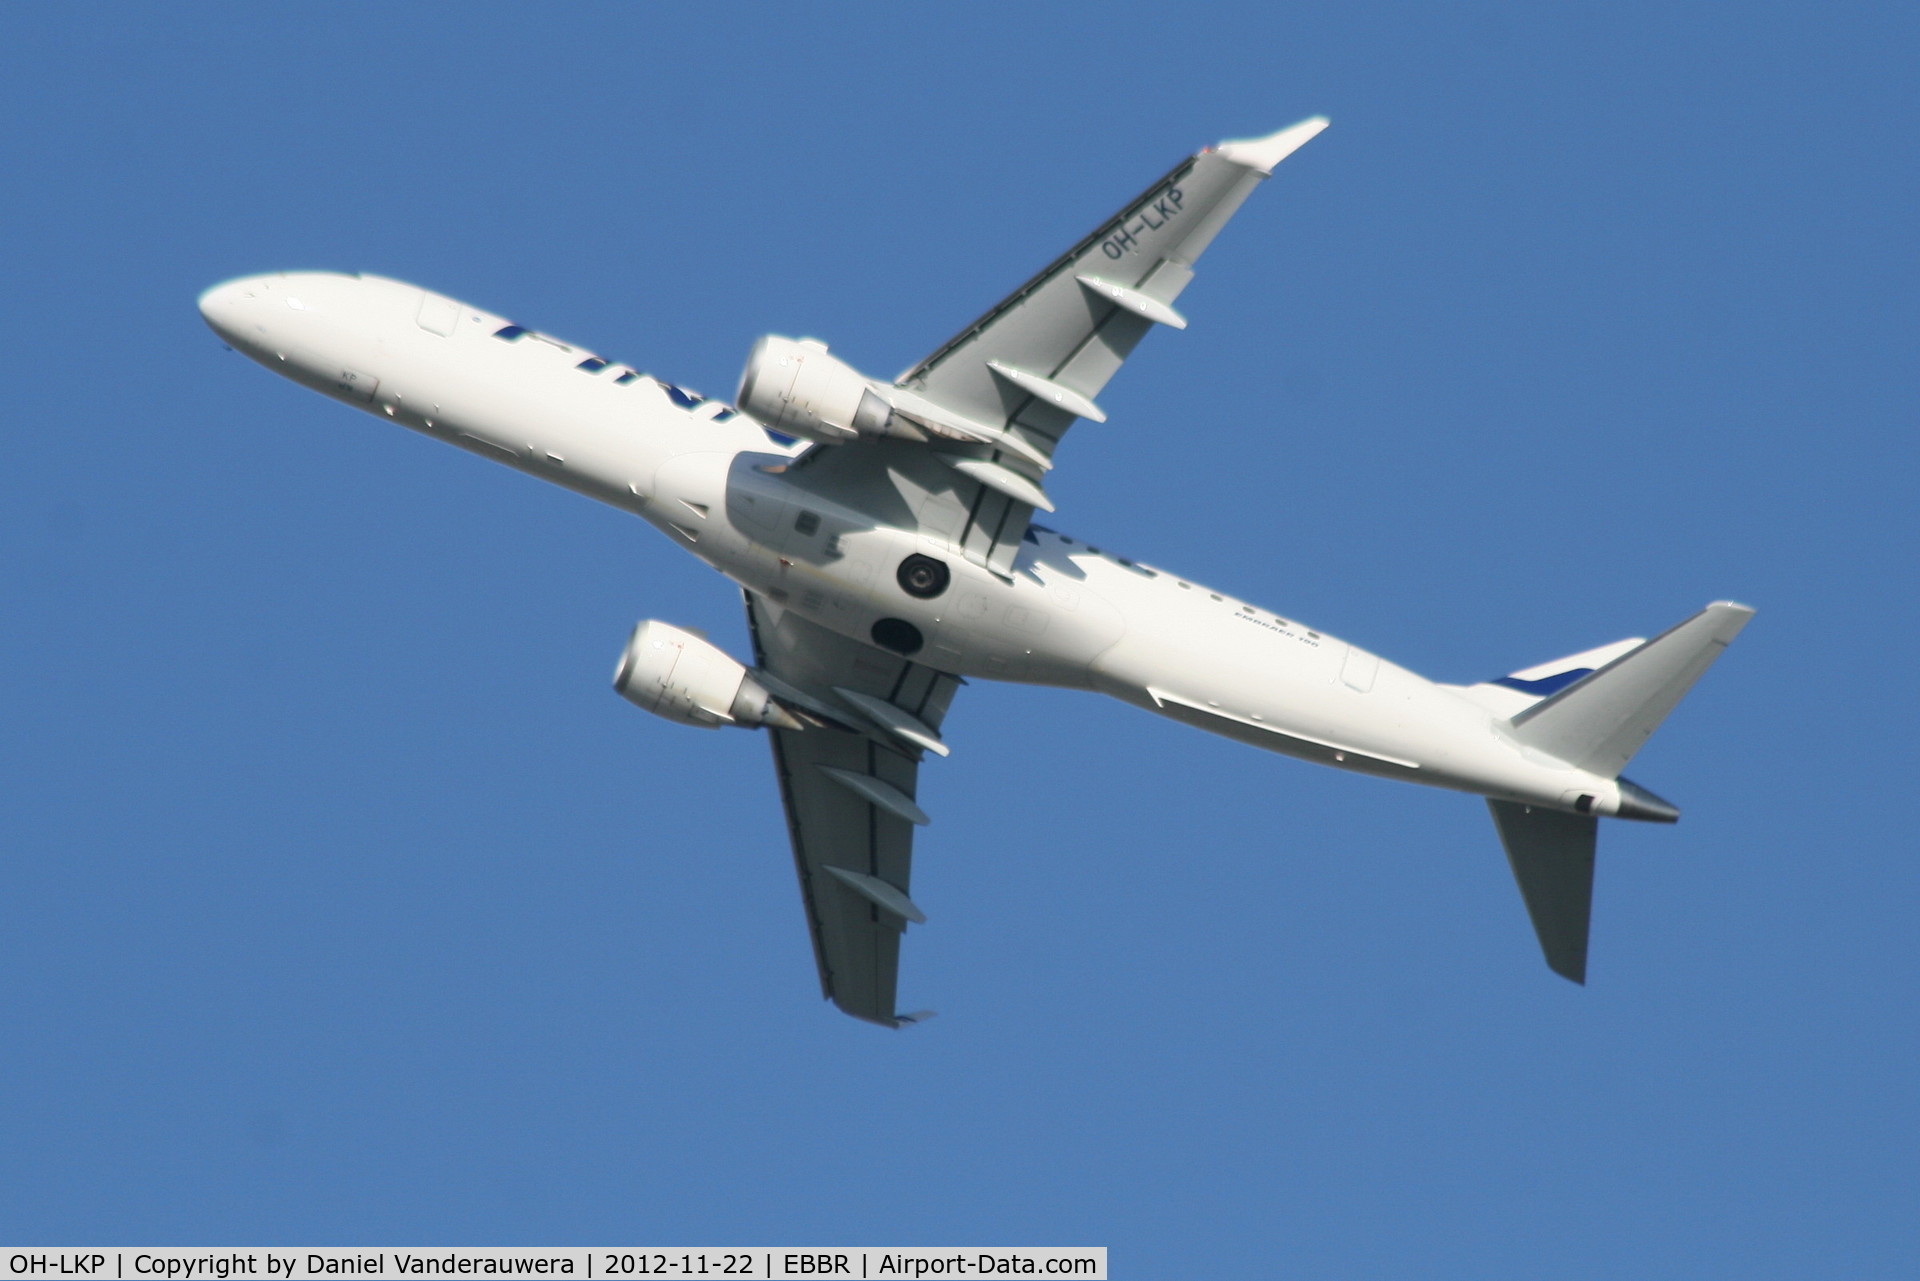 OH-LKP, 2011 Embraer 190LR (ERJ-190-100LR) C/N 19000416, Flight AY812 is climbing from RWY 25R